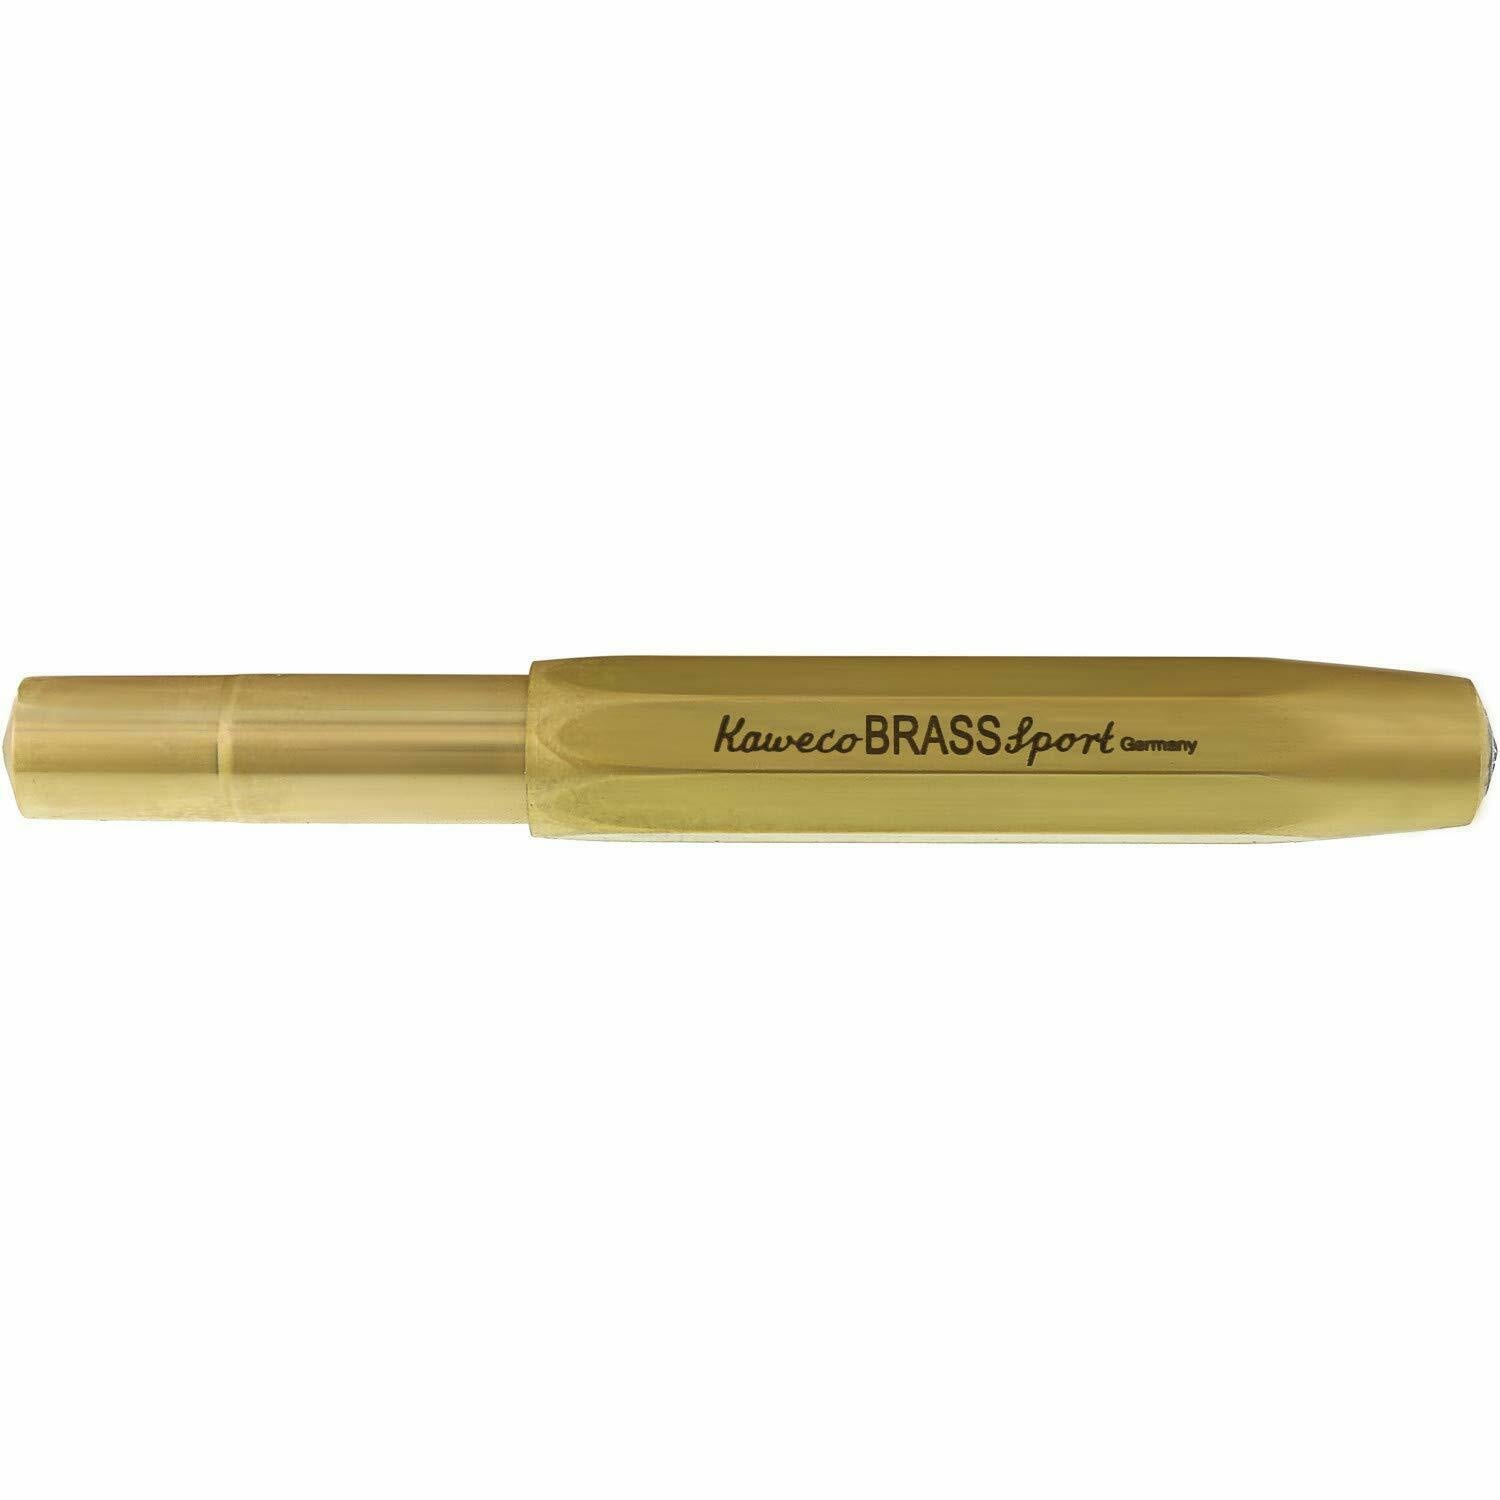 Kaweco Steel Sport Fountain Pen in Raw Brass with Medium Nib